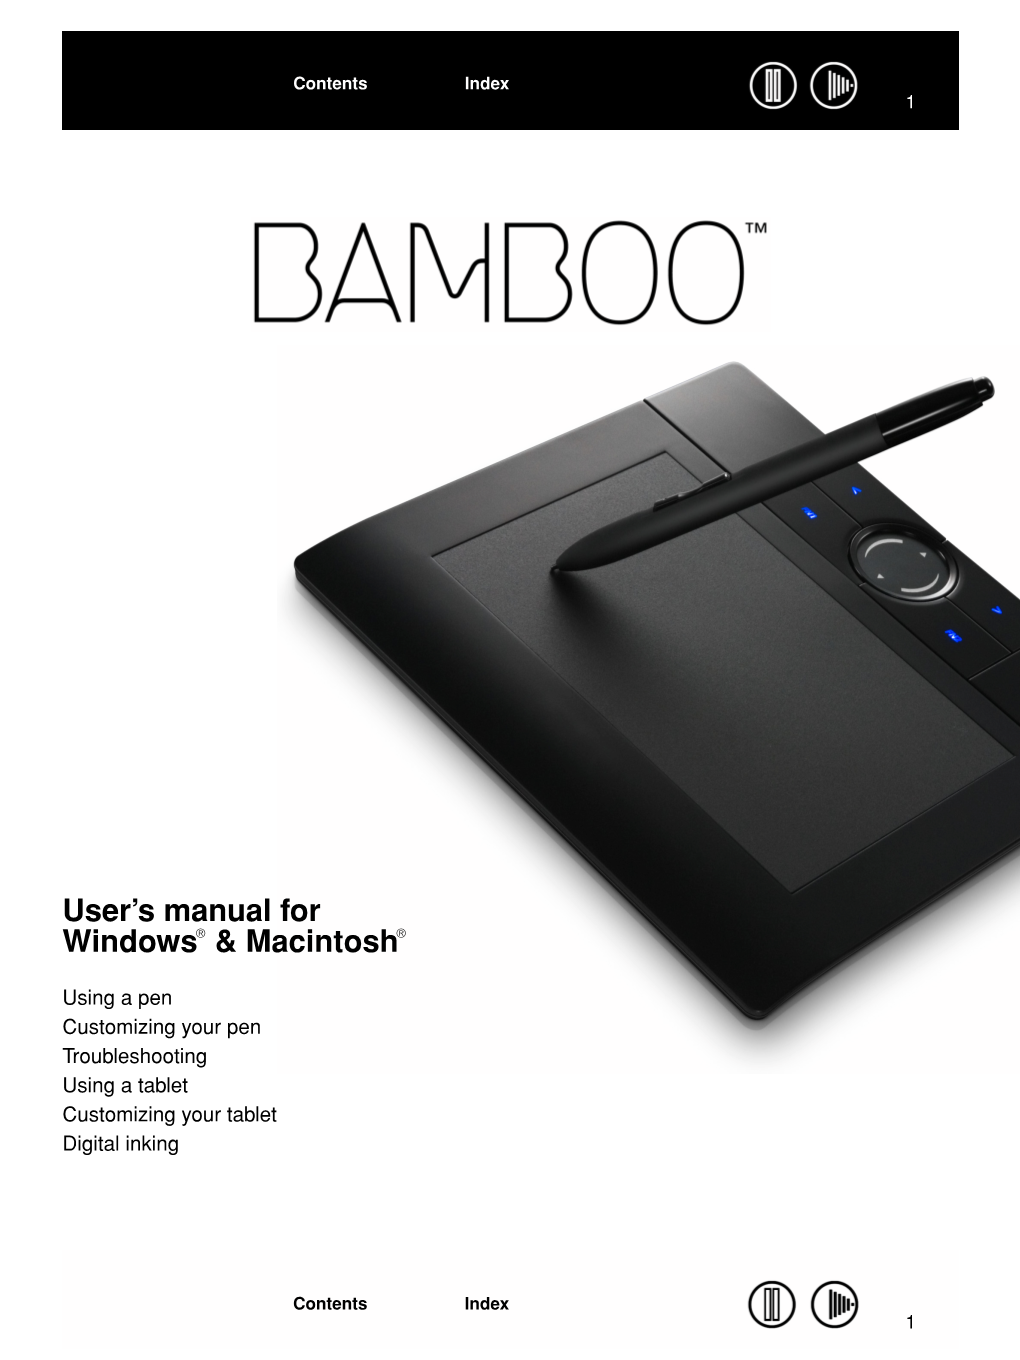 Bamboo User's Manual for Windows & Macintosh